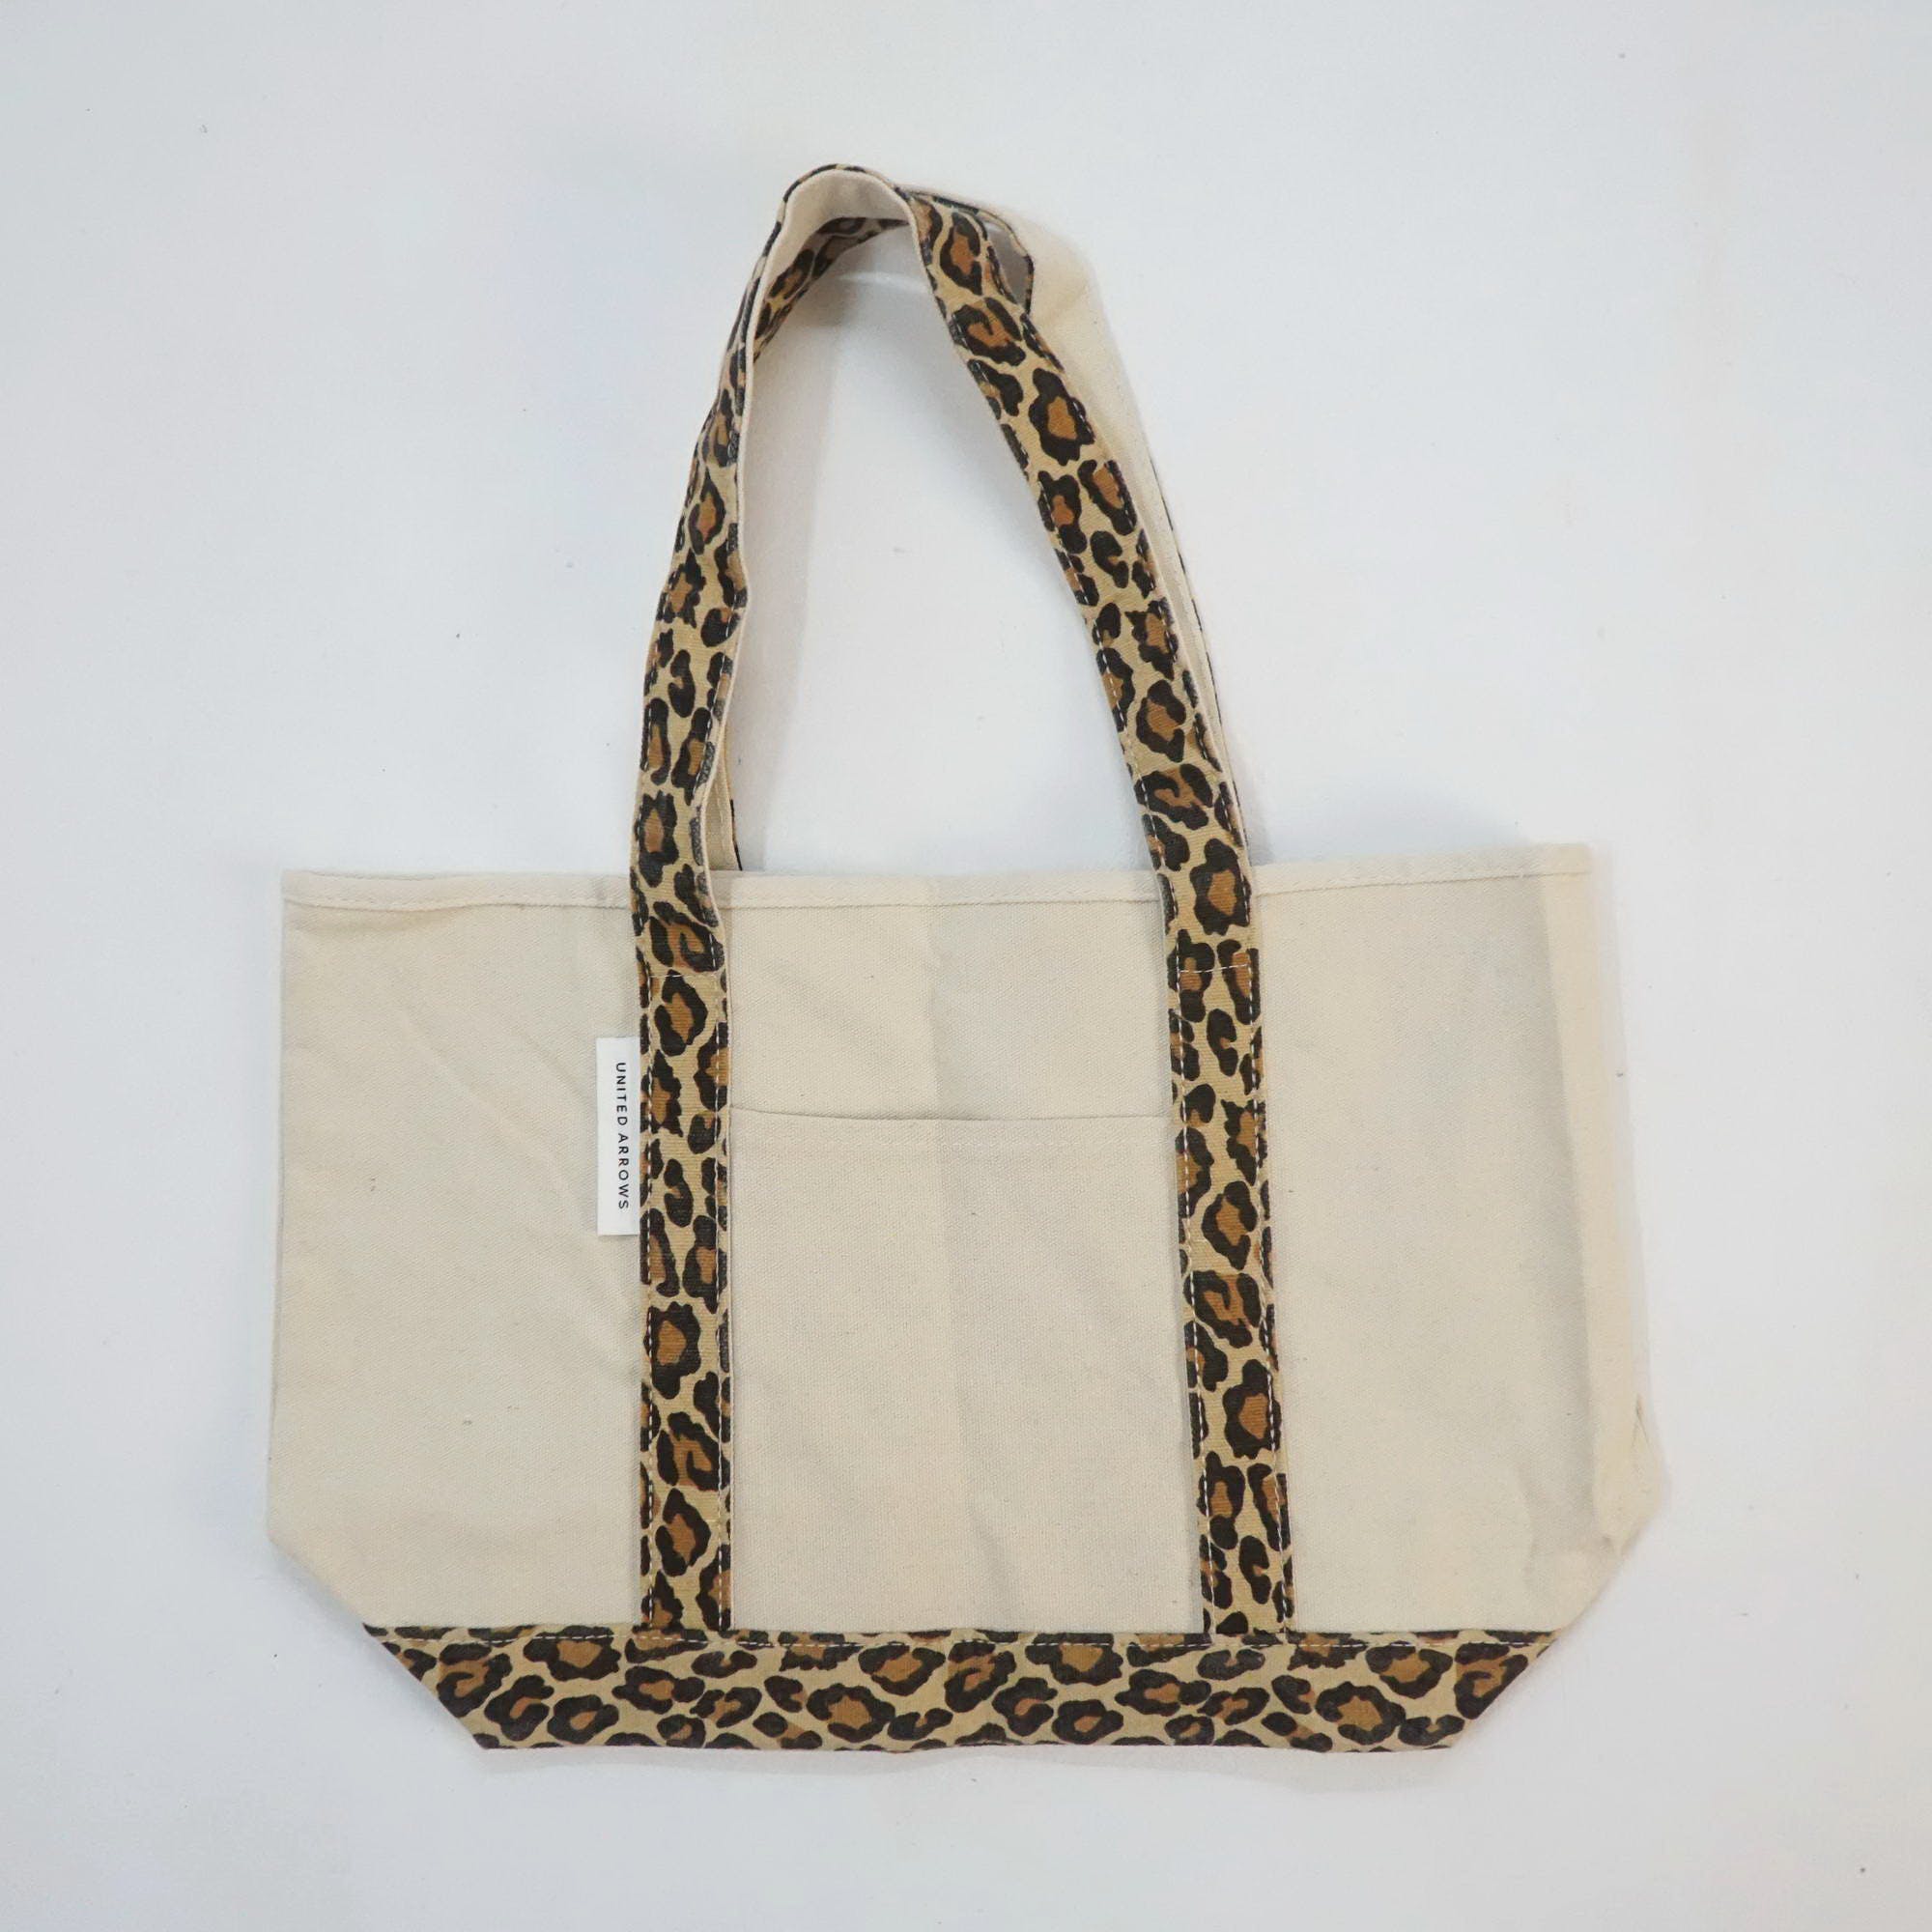 UNITED ARROWS Leopard Printed Tote Bag - 2